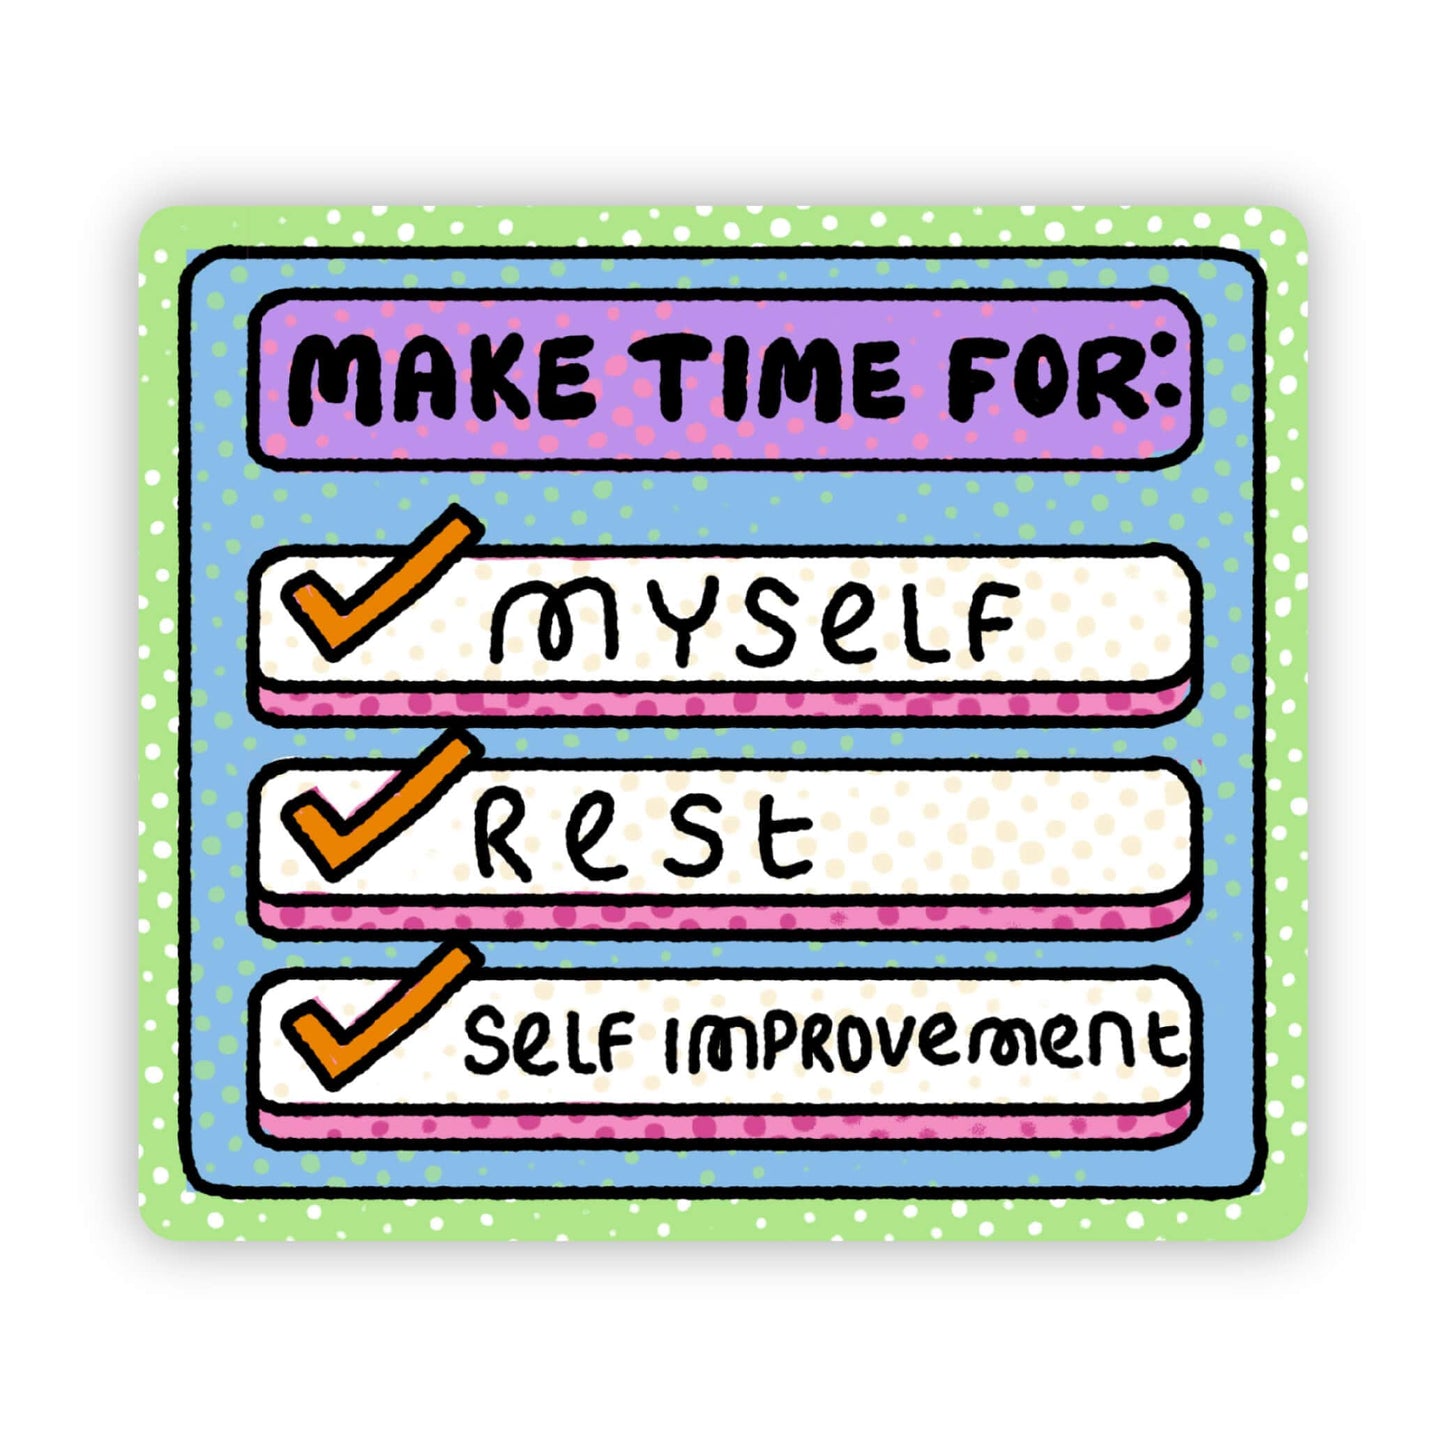 Make Time For: Myself, Rest, Self Improvement